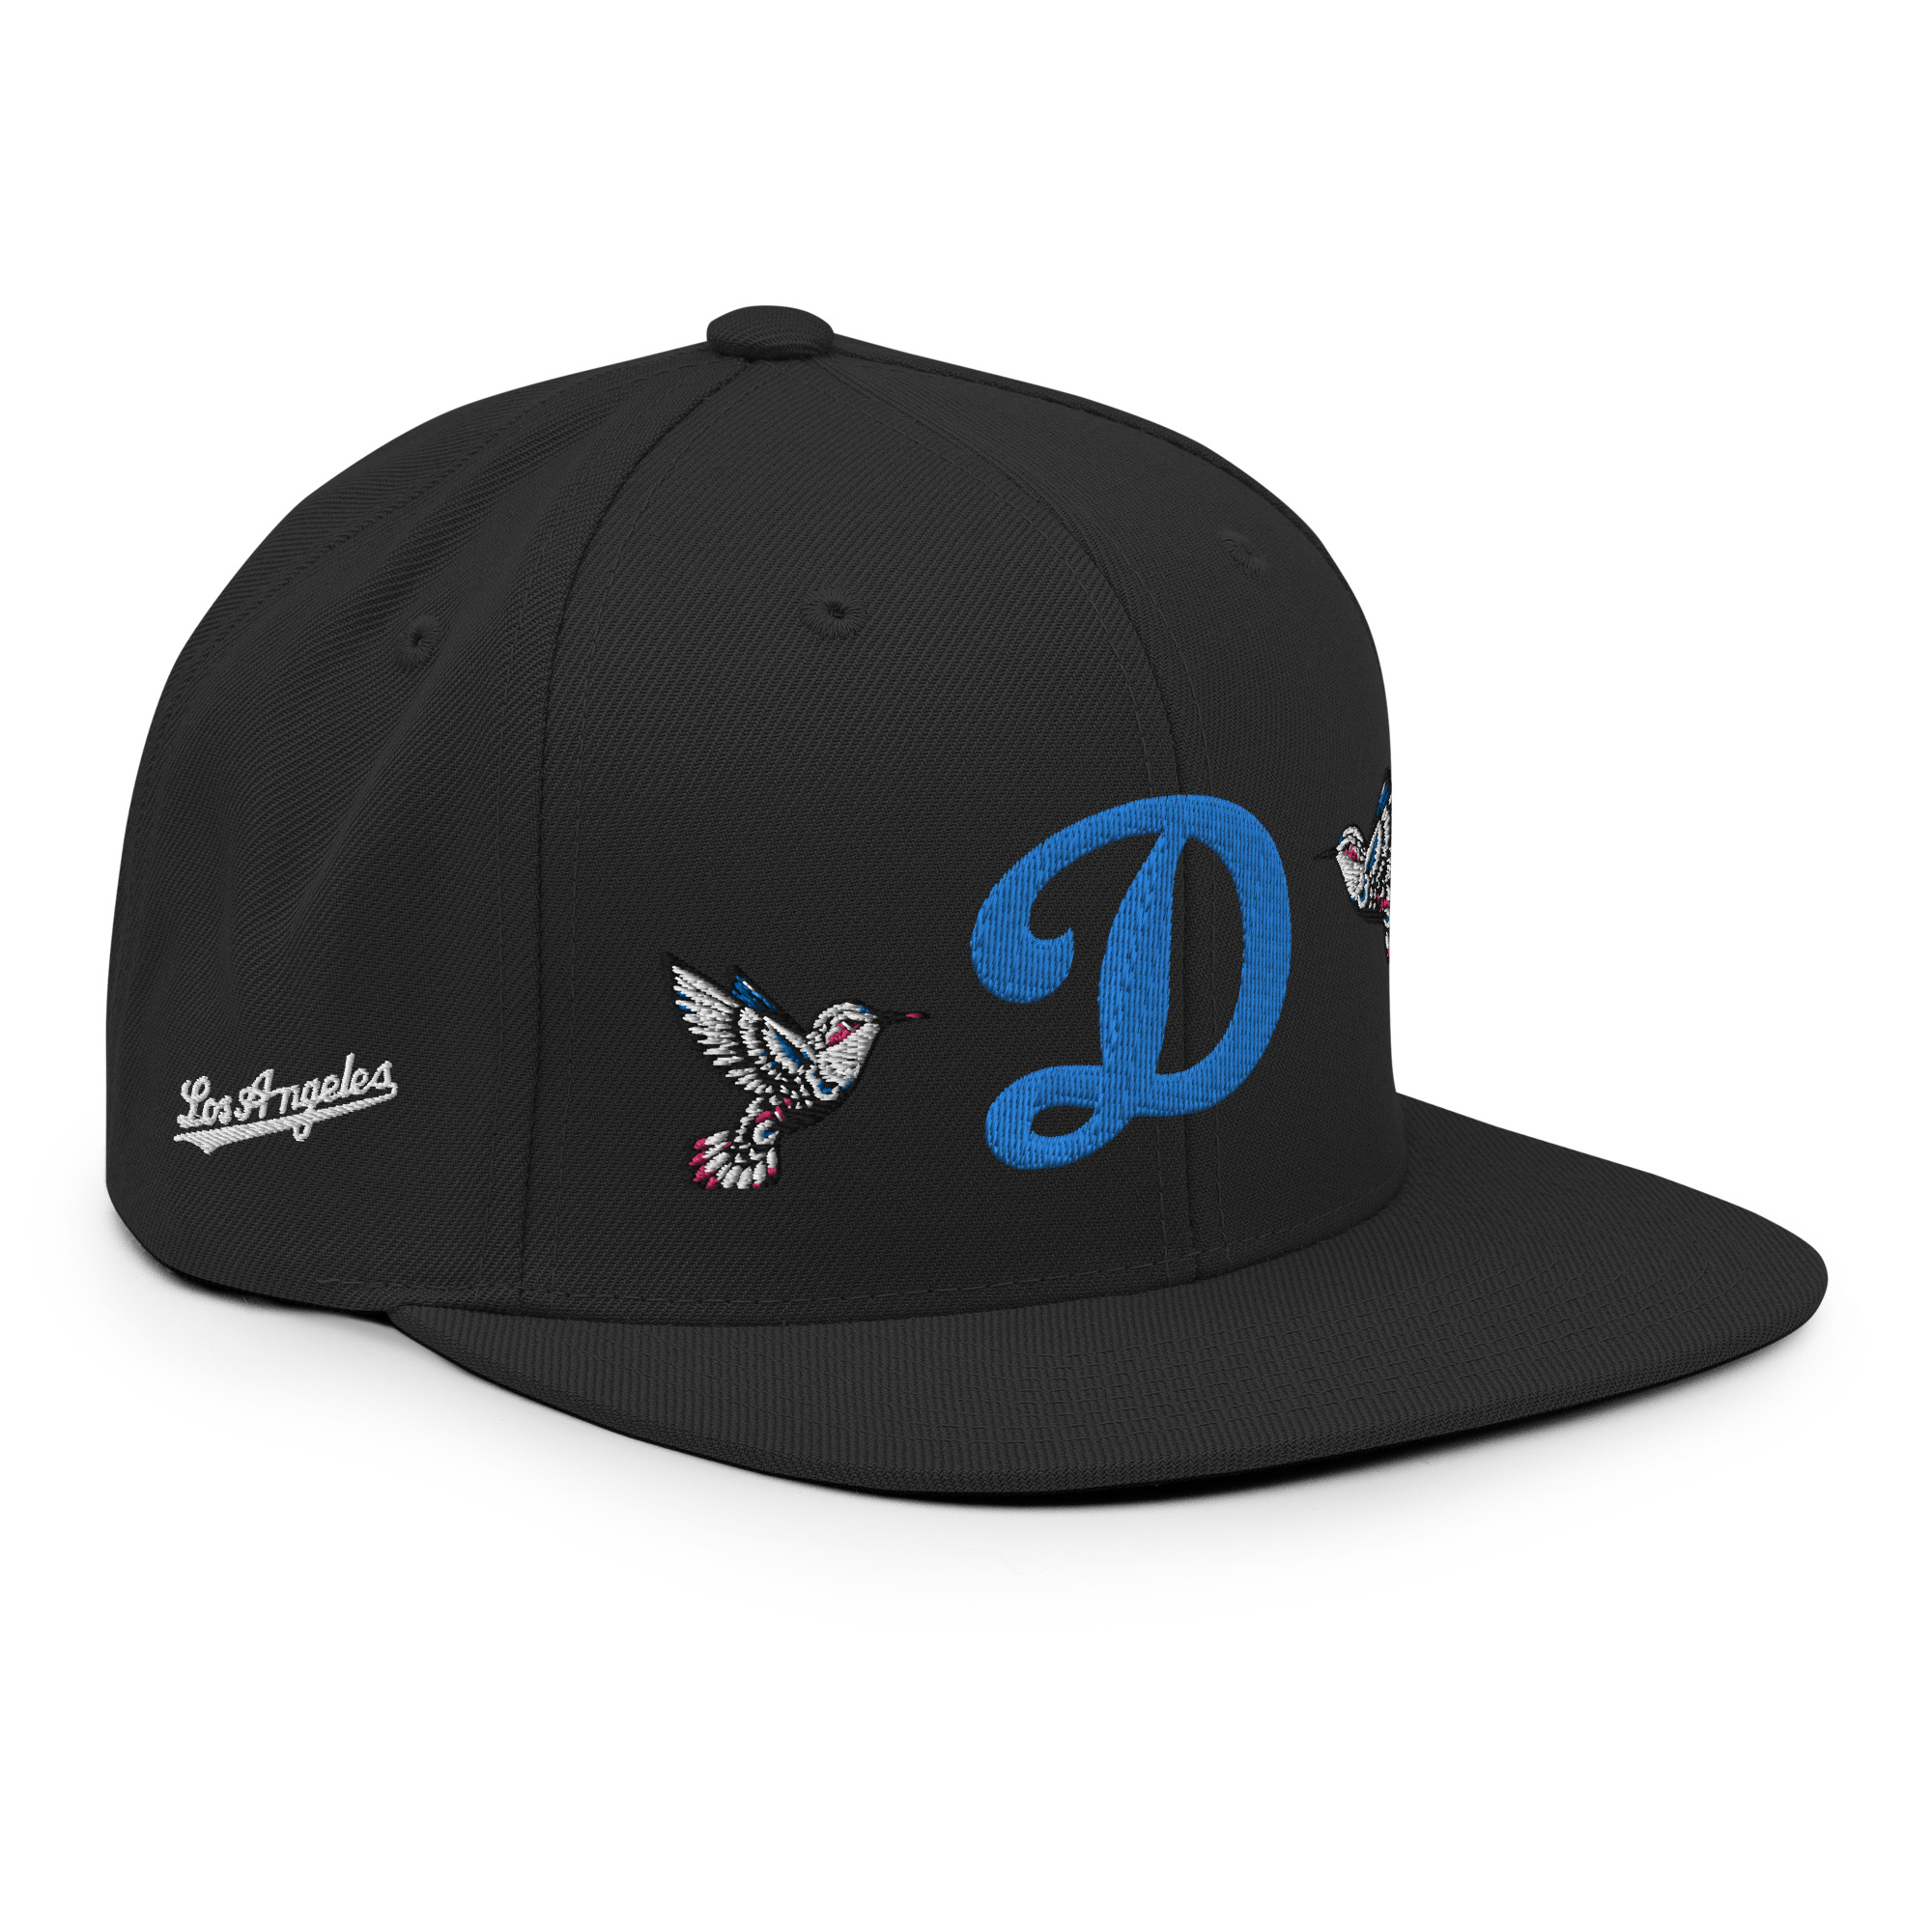 Dodgers Snapback Hat